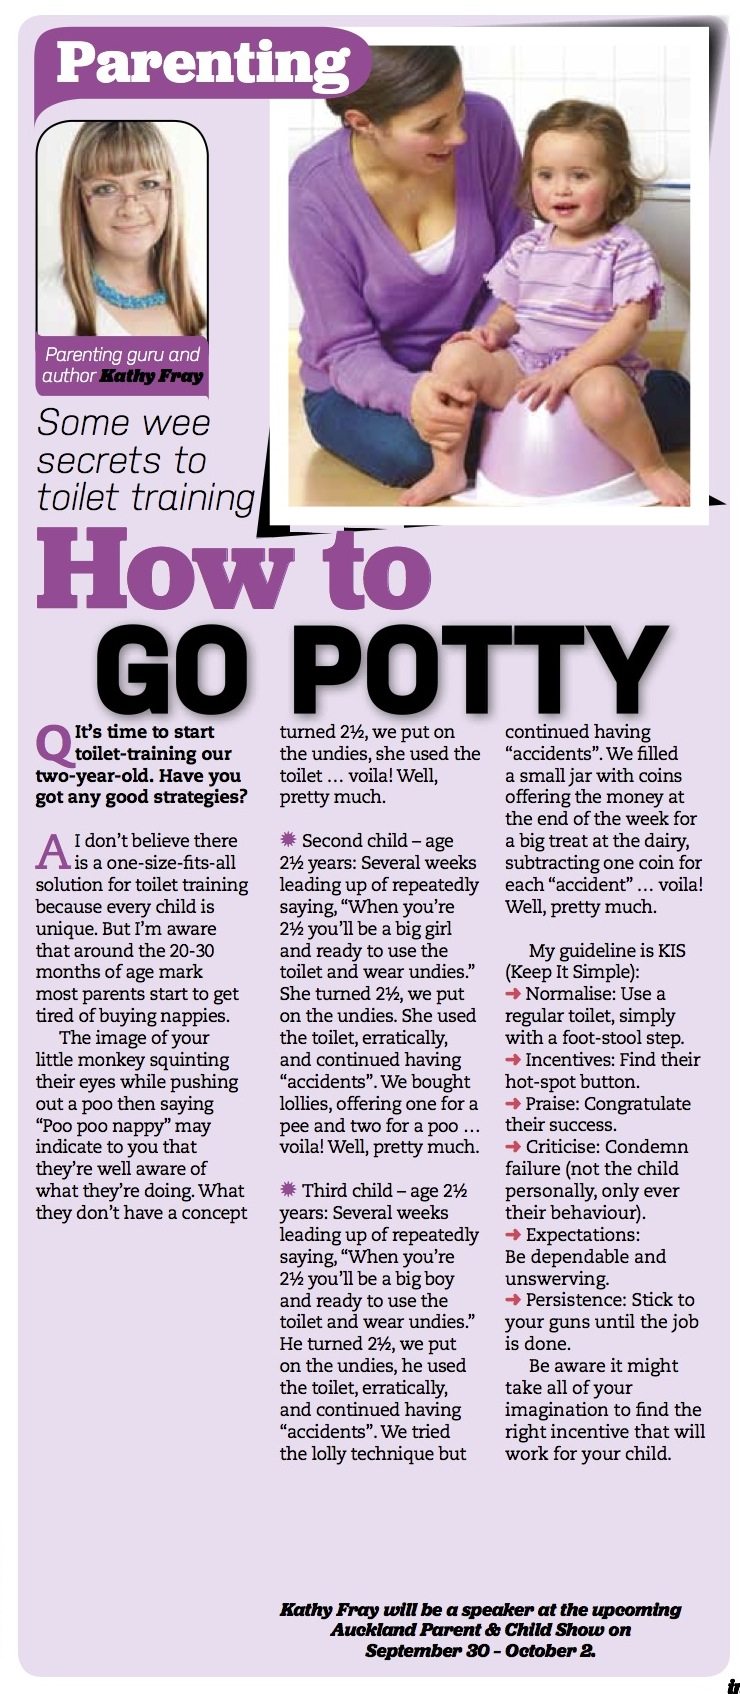 How to go potty